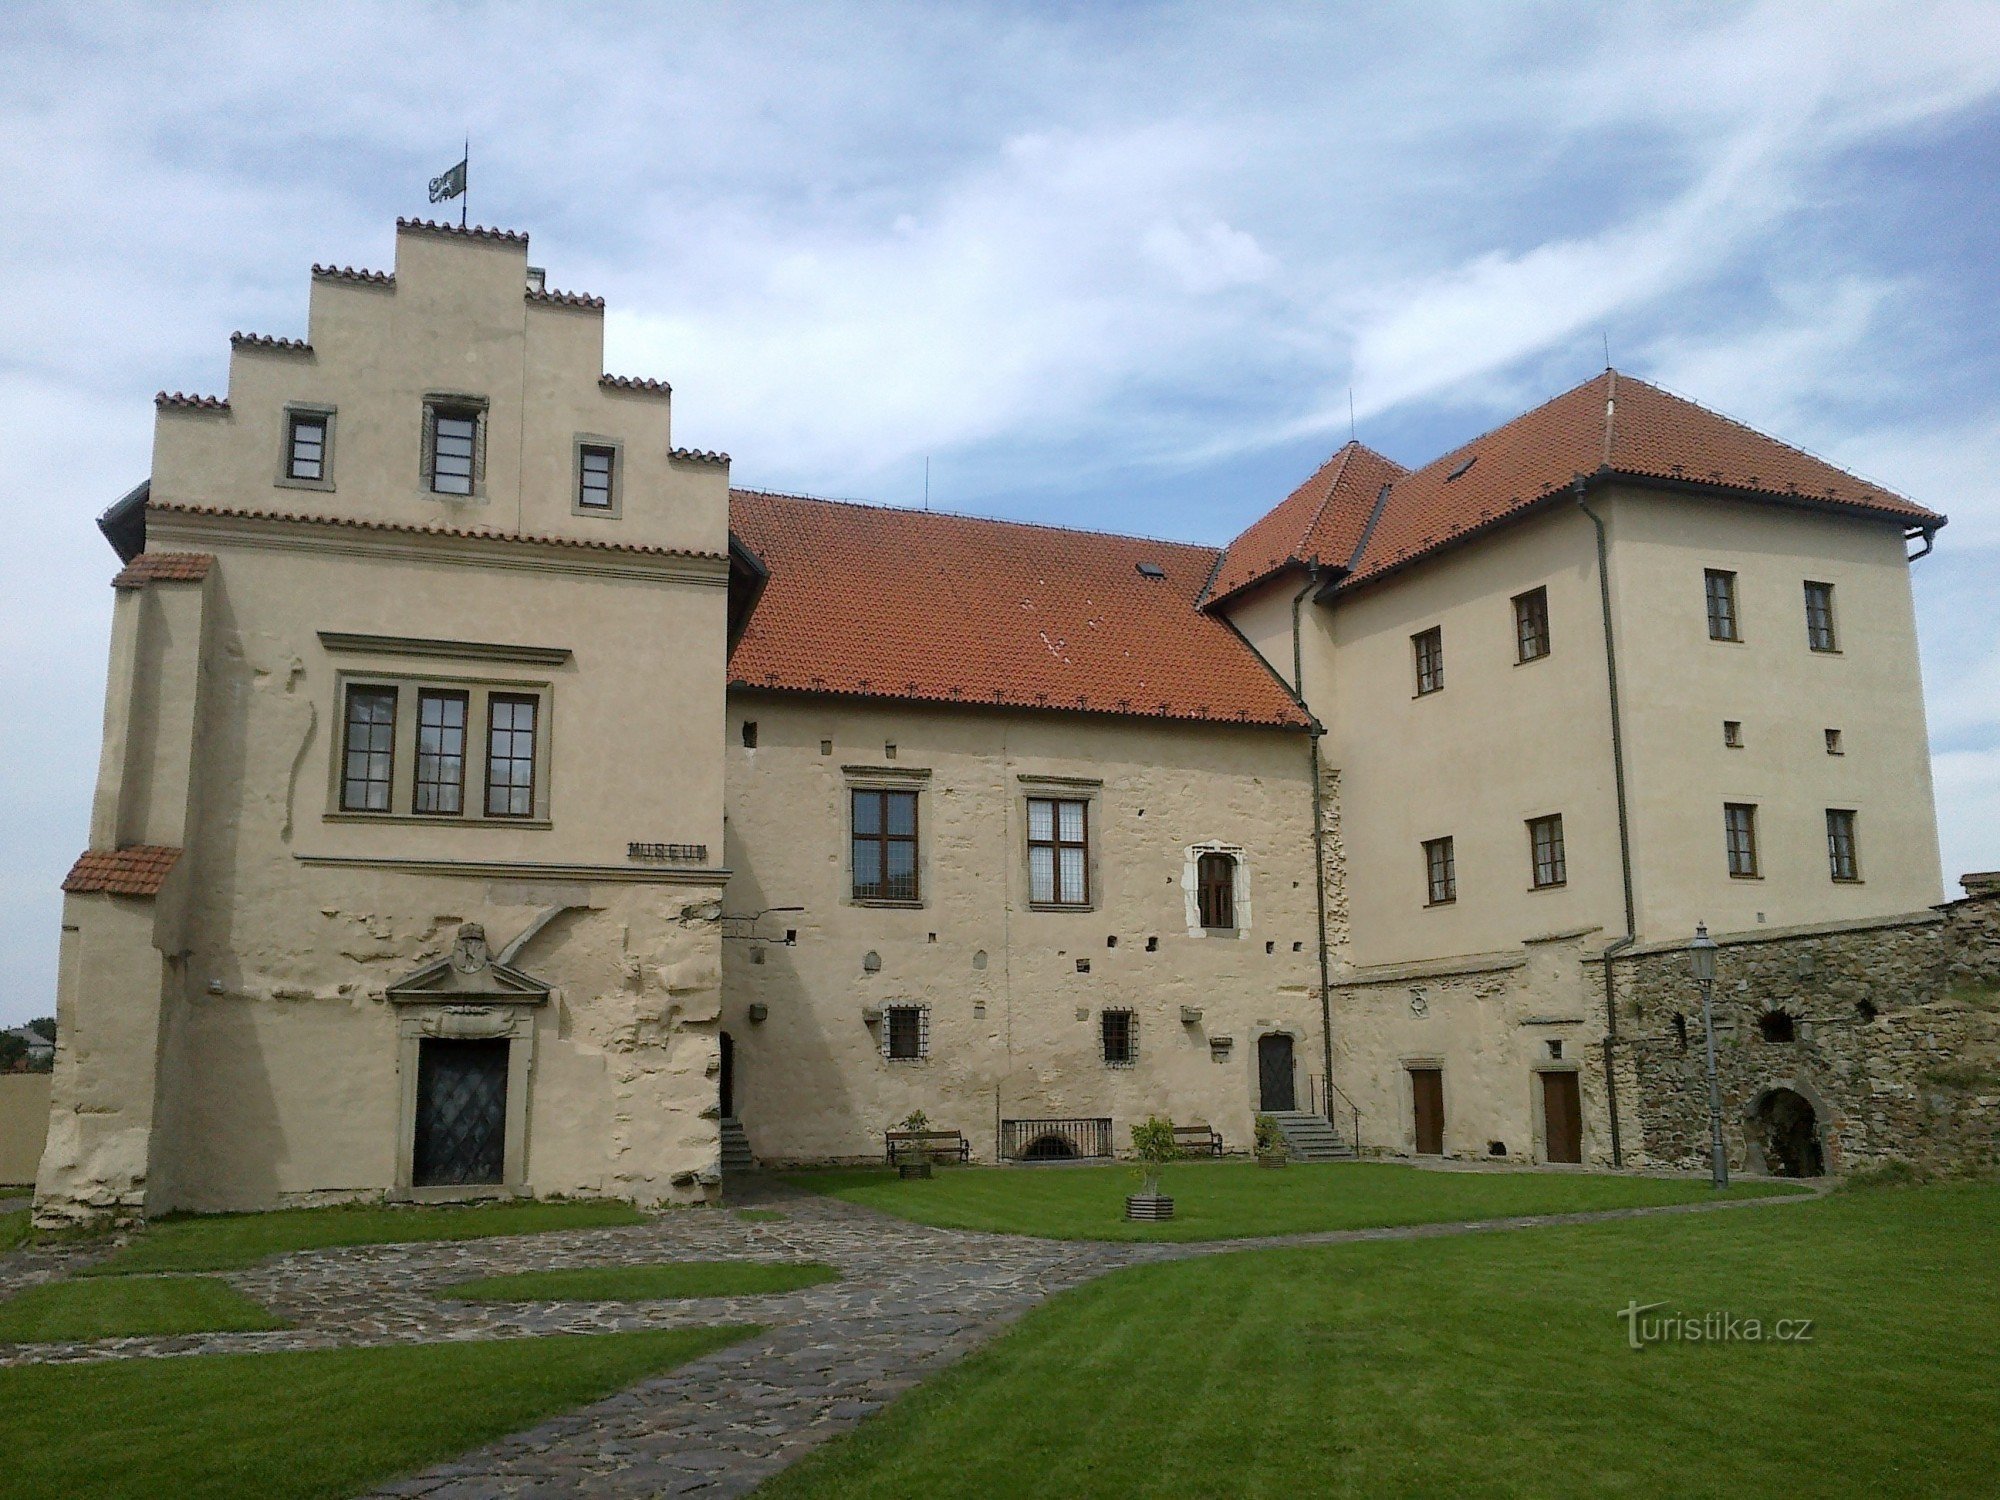 Polná - historiallinen kaupunki Vysočinassa.